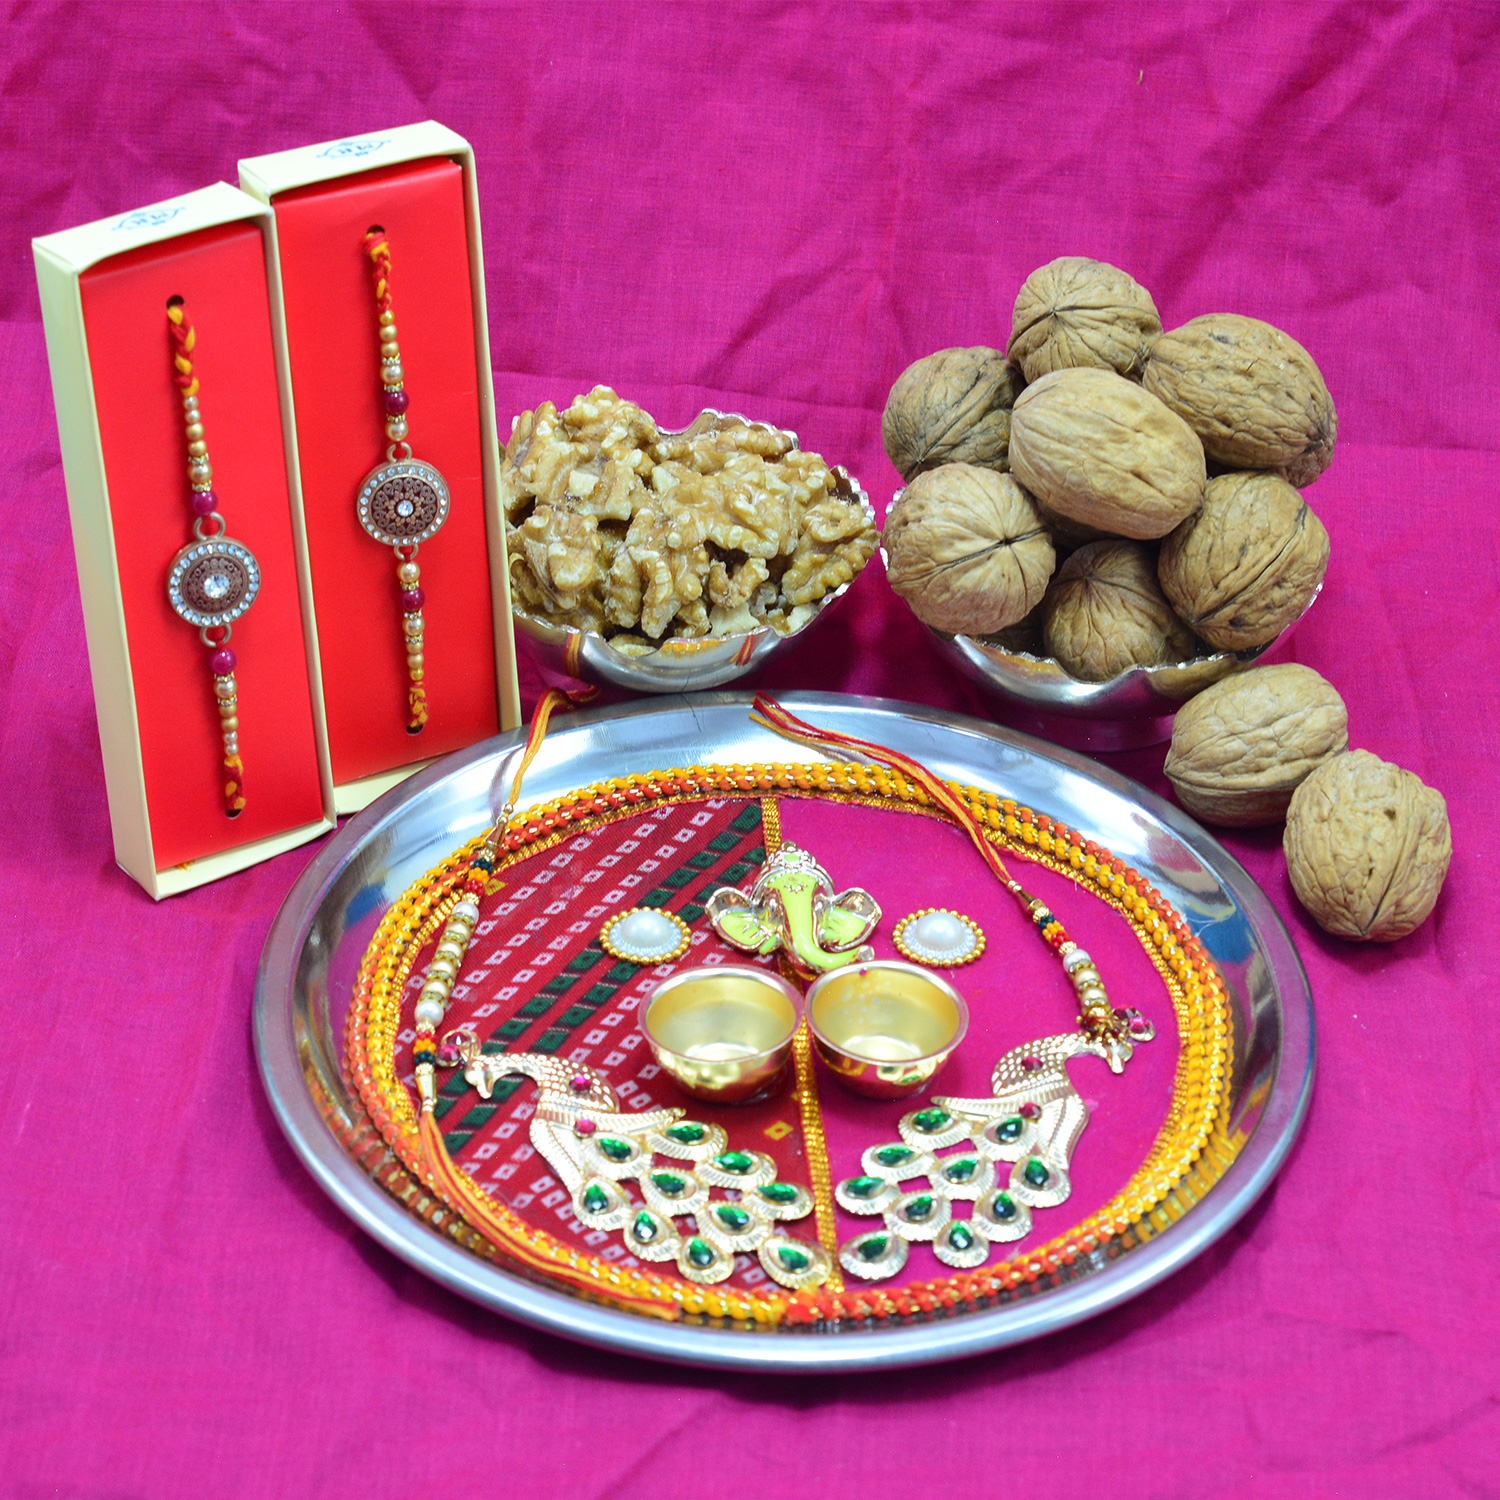 Akhrot Dry Fruits with Colorful Shri Ganesha Rakhi Pooja Thali and Multiple Rakhis for Family